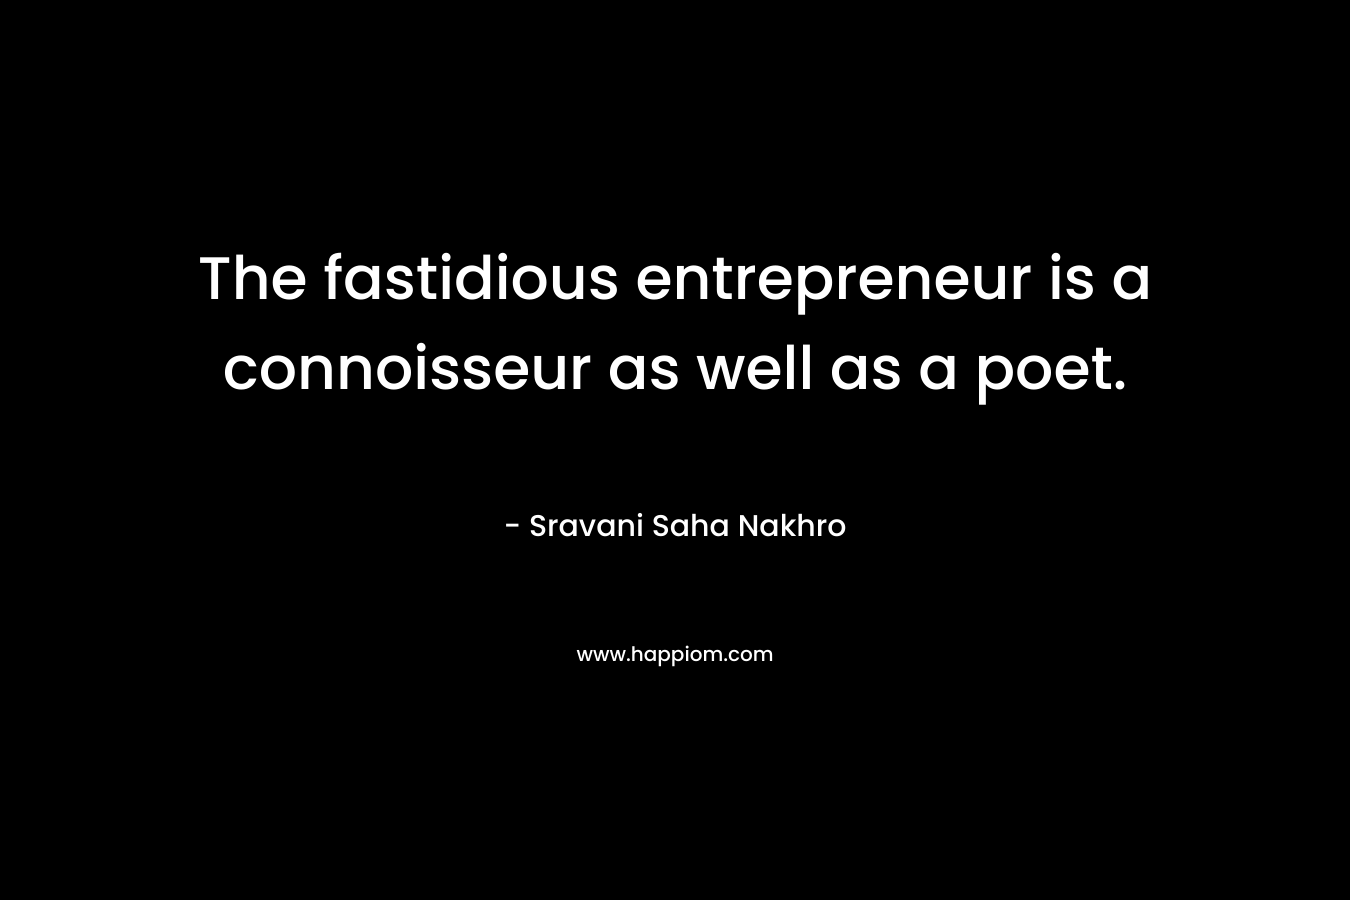 The fastidious entrepreneur is a connoisseur as well as a poet. – Sravani Saha Nakhro